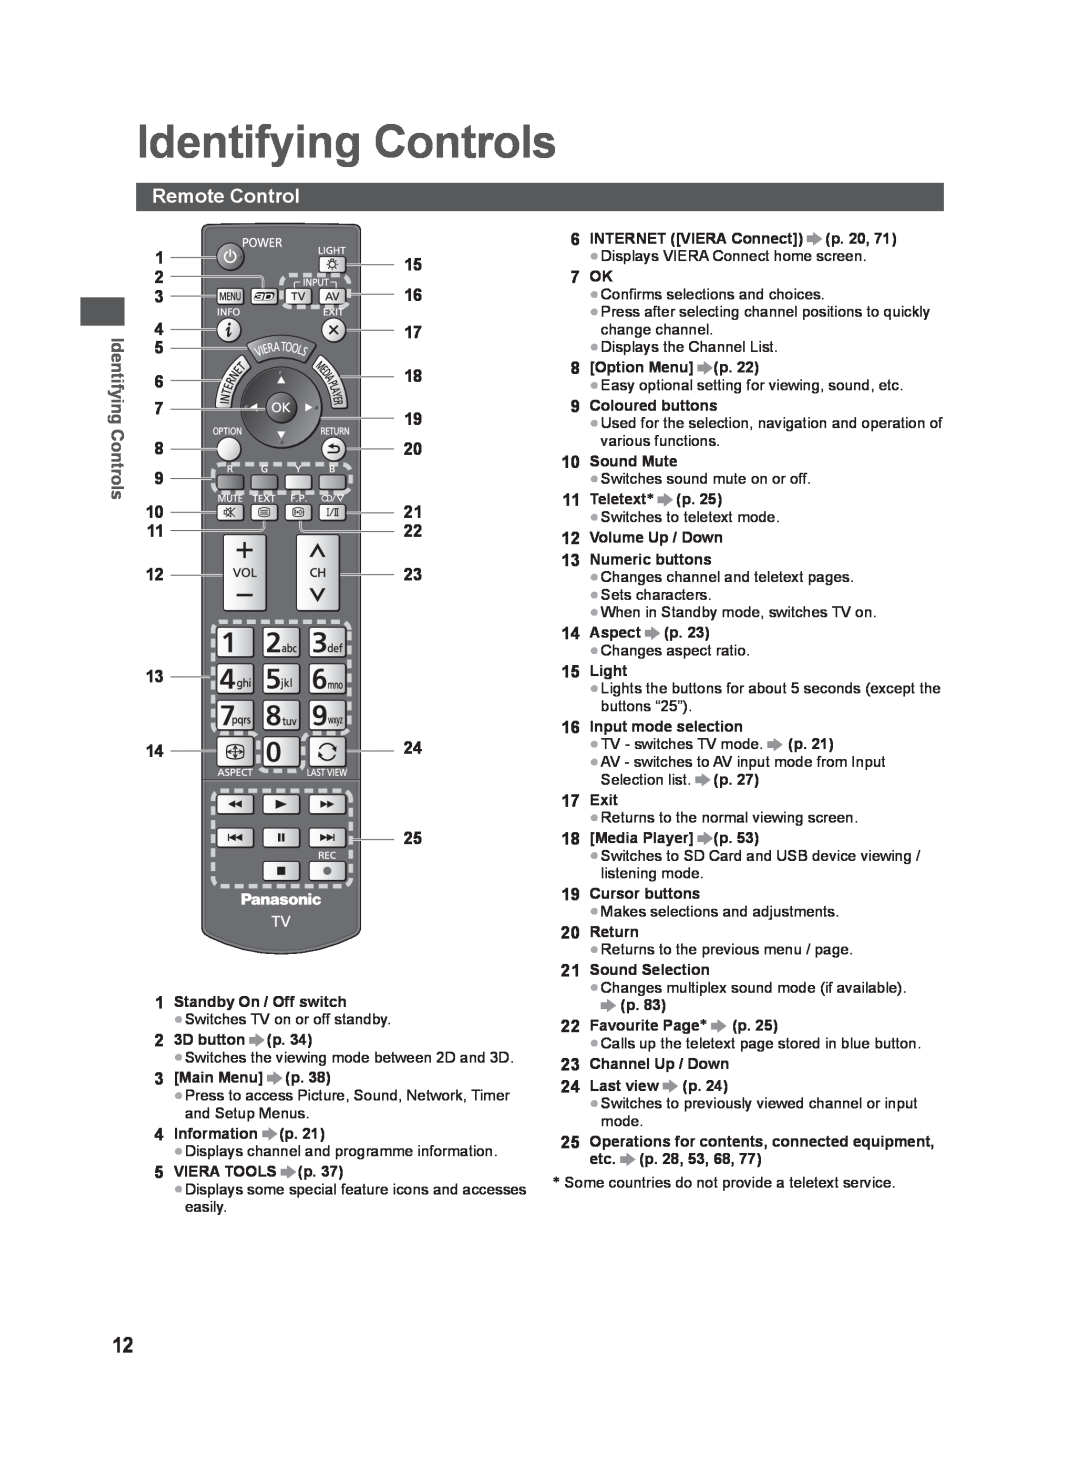 Panasonic ST50K, ST50T, ST50D, ST50M, ST50P warranty Identifying Controls, Remote Control 